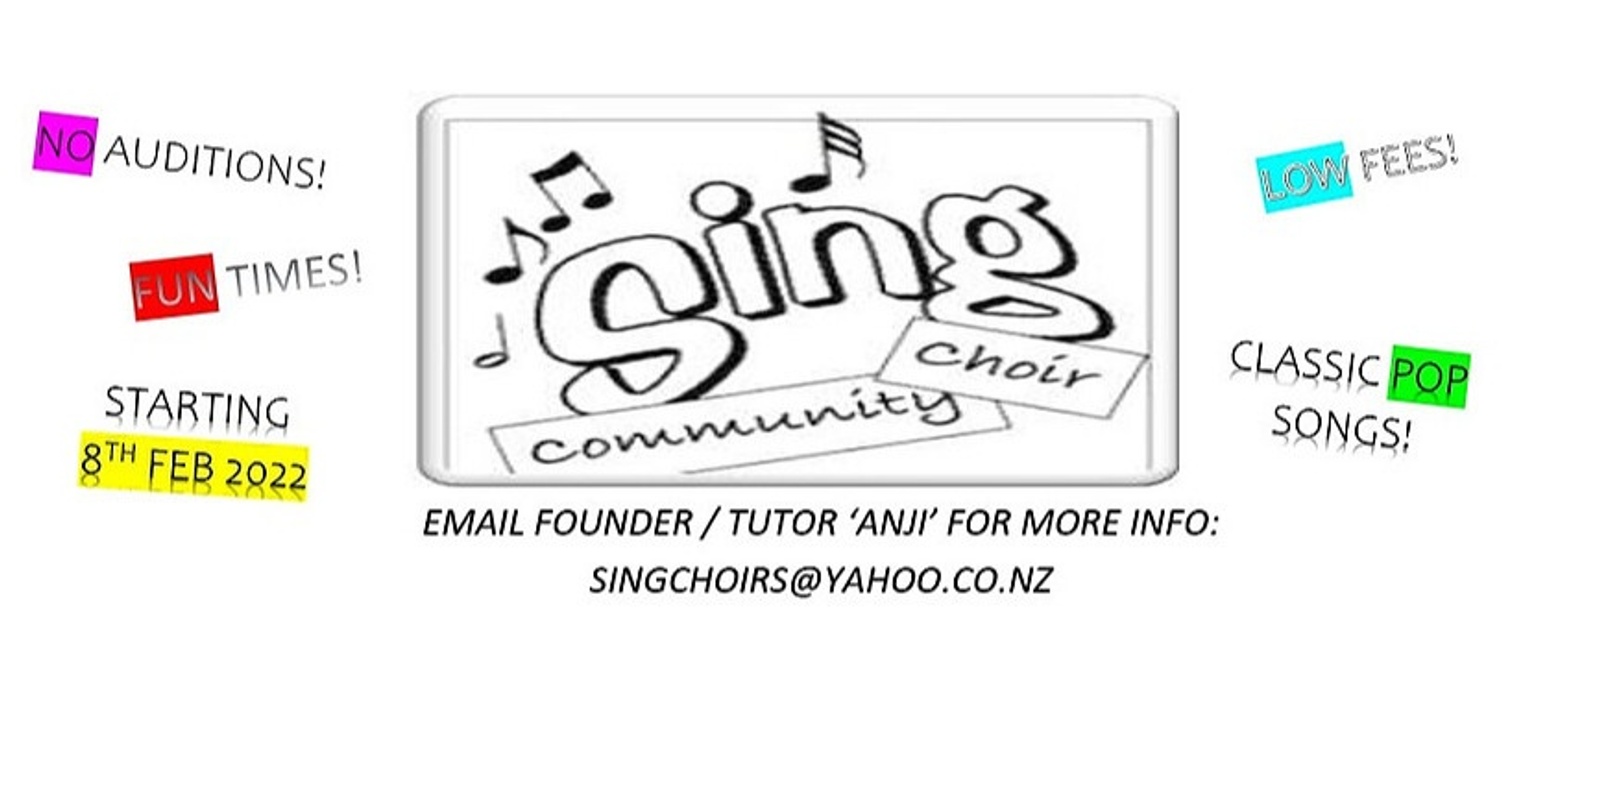 SING! Community Choir (Wellington) - Classic Pop Songs Galore!!